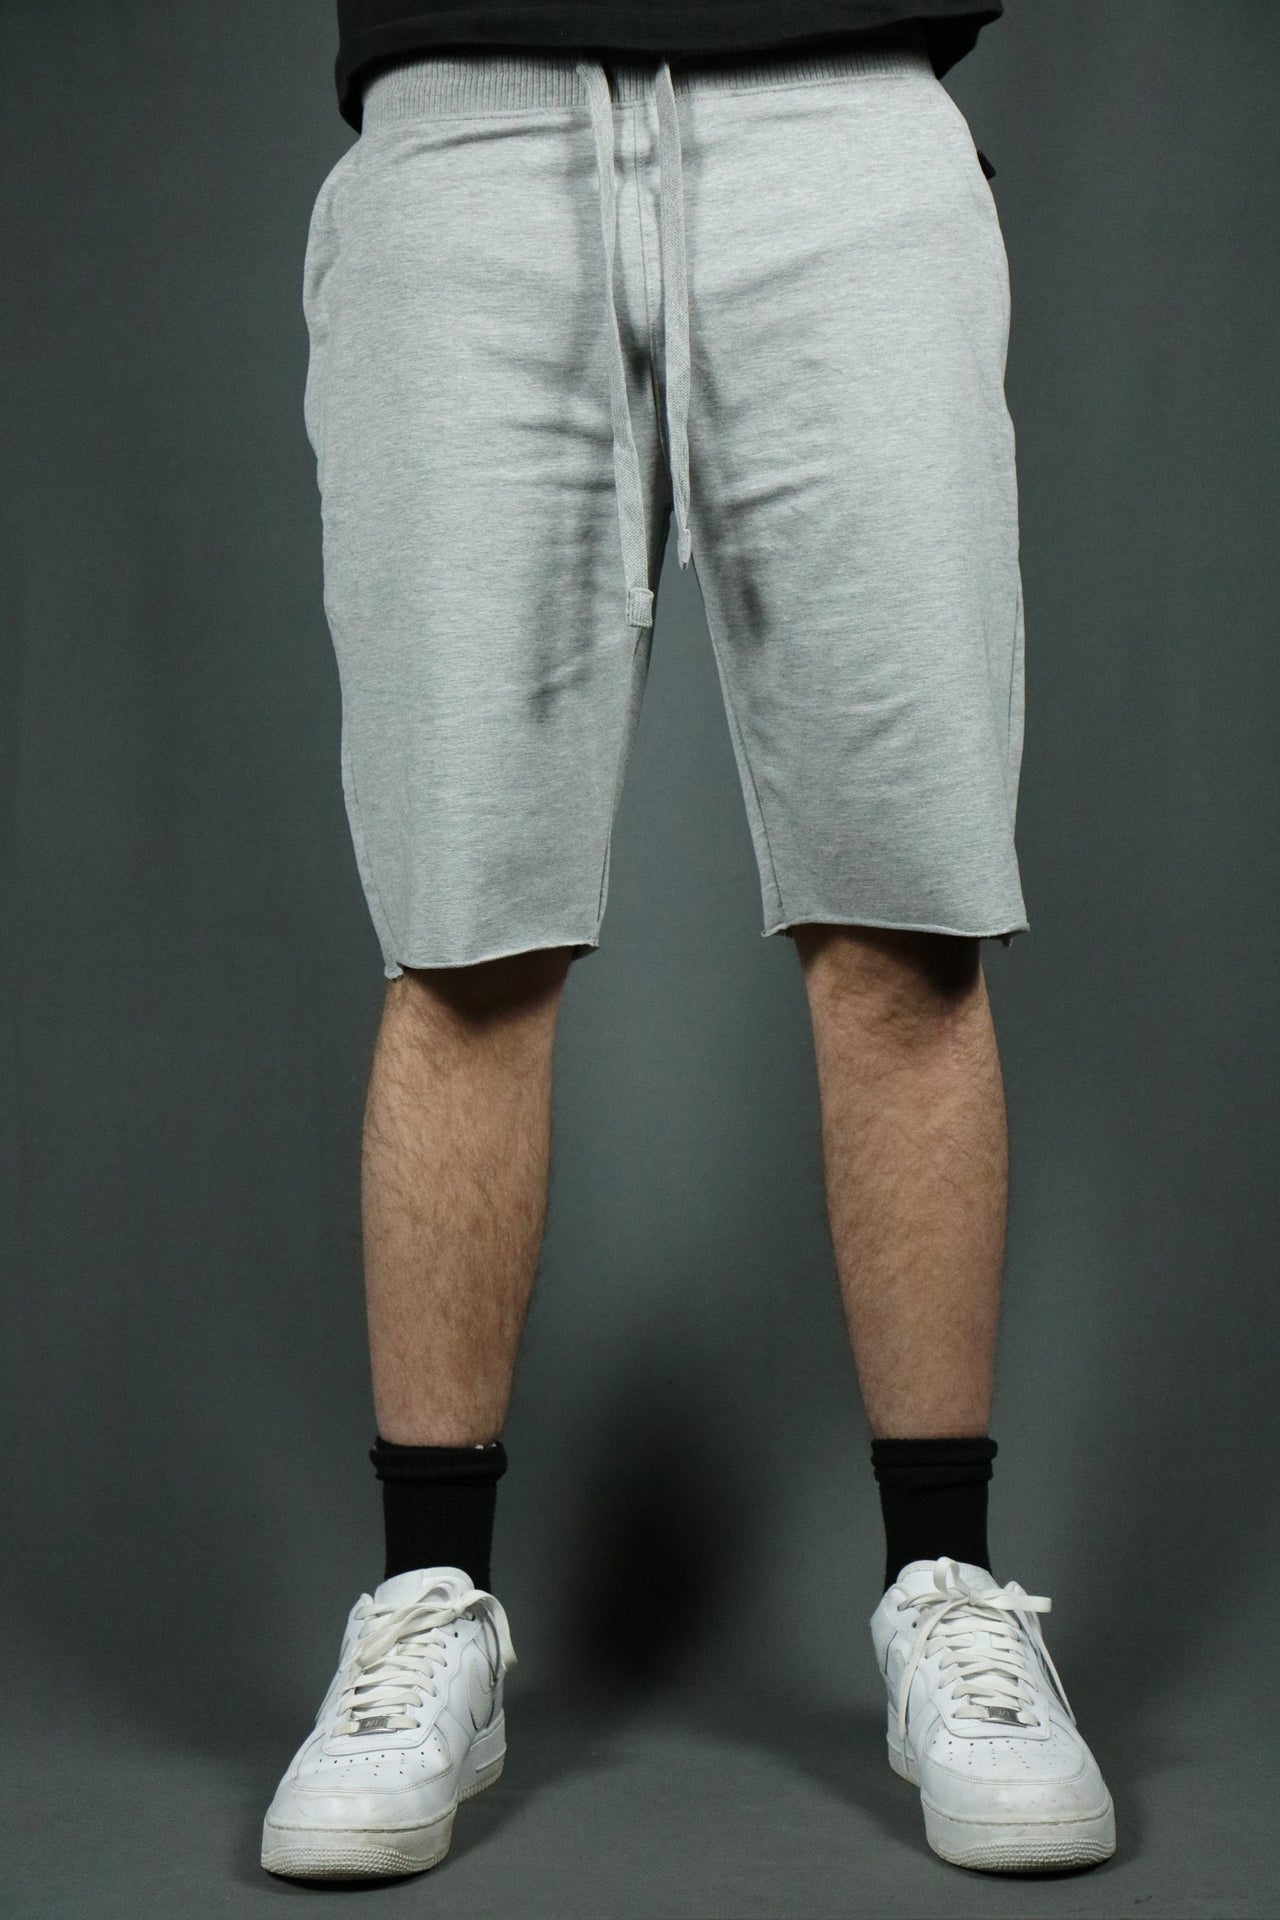 A pair of heather grey terry cloth shorts by Jordan Craig.